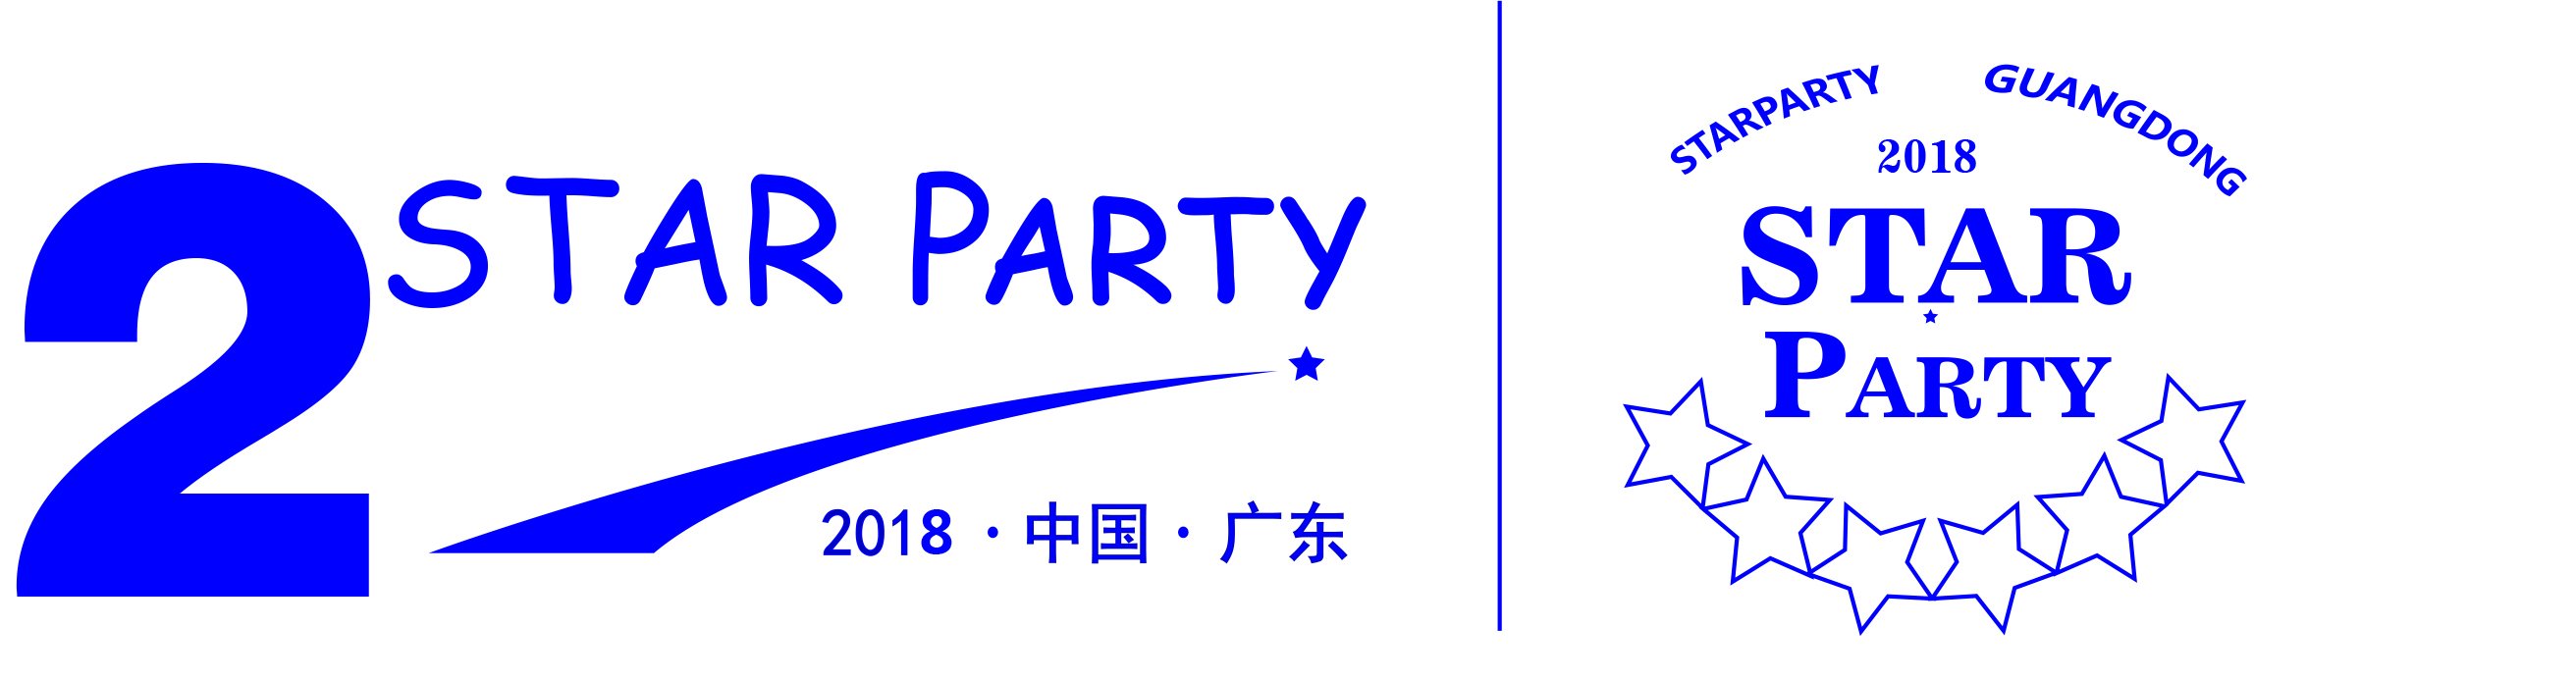 star party logo（轮廓）.jpg